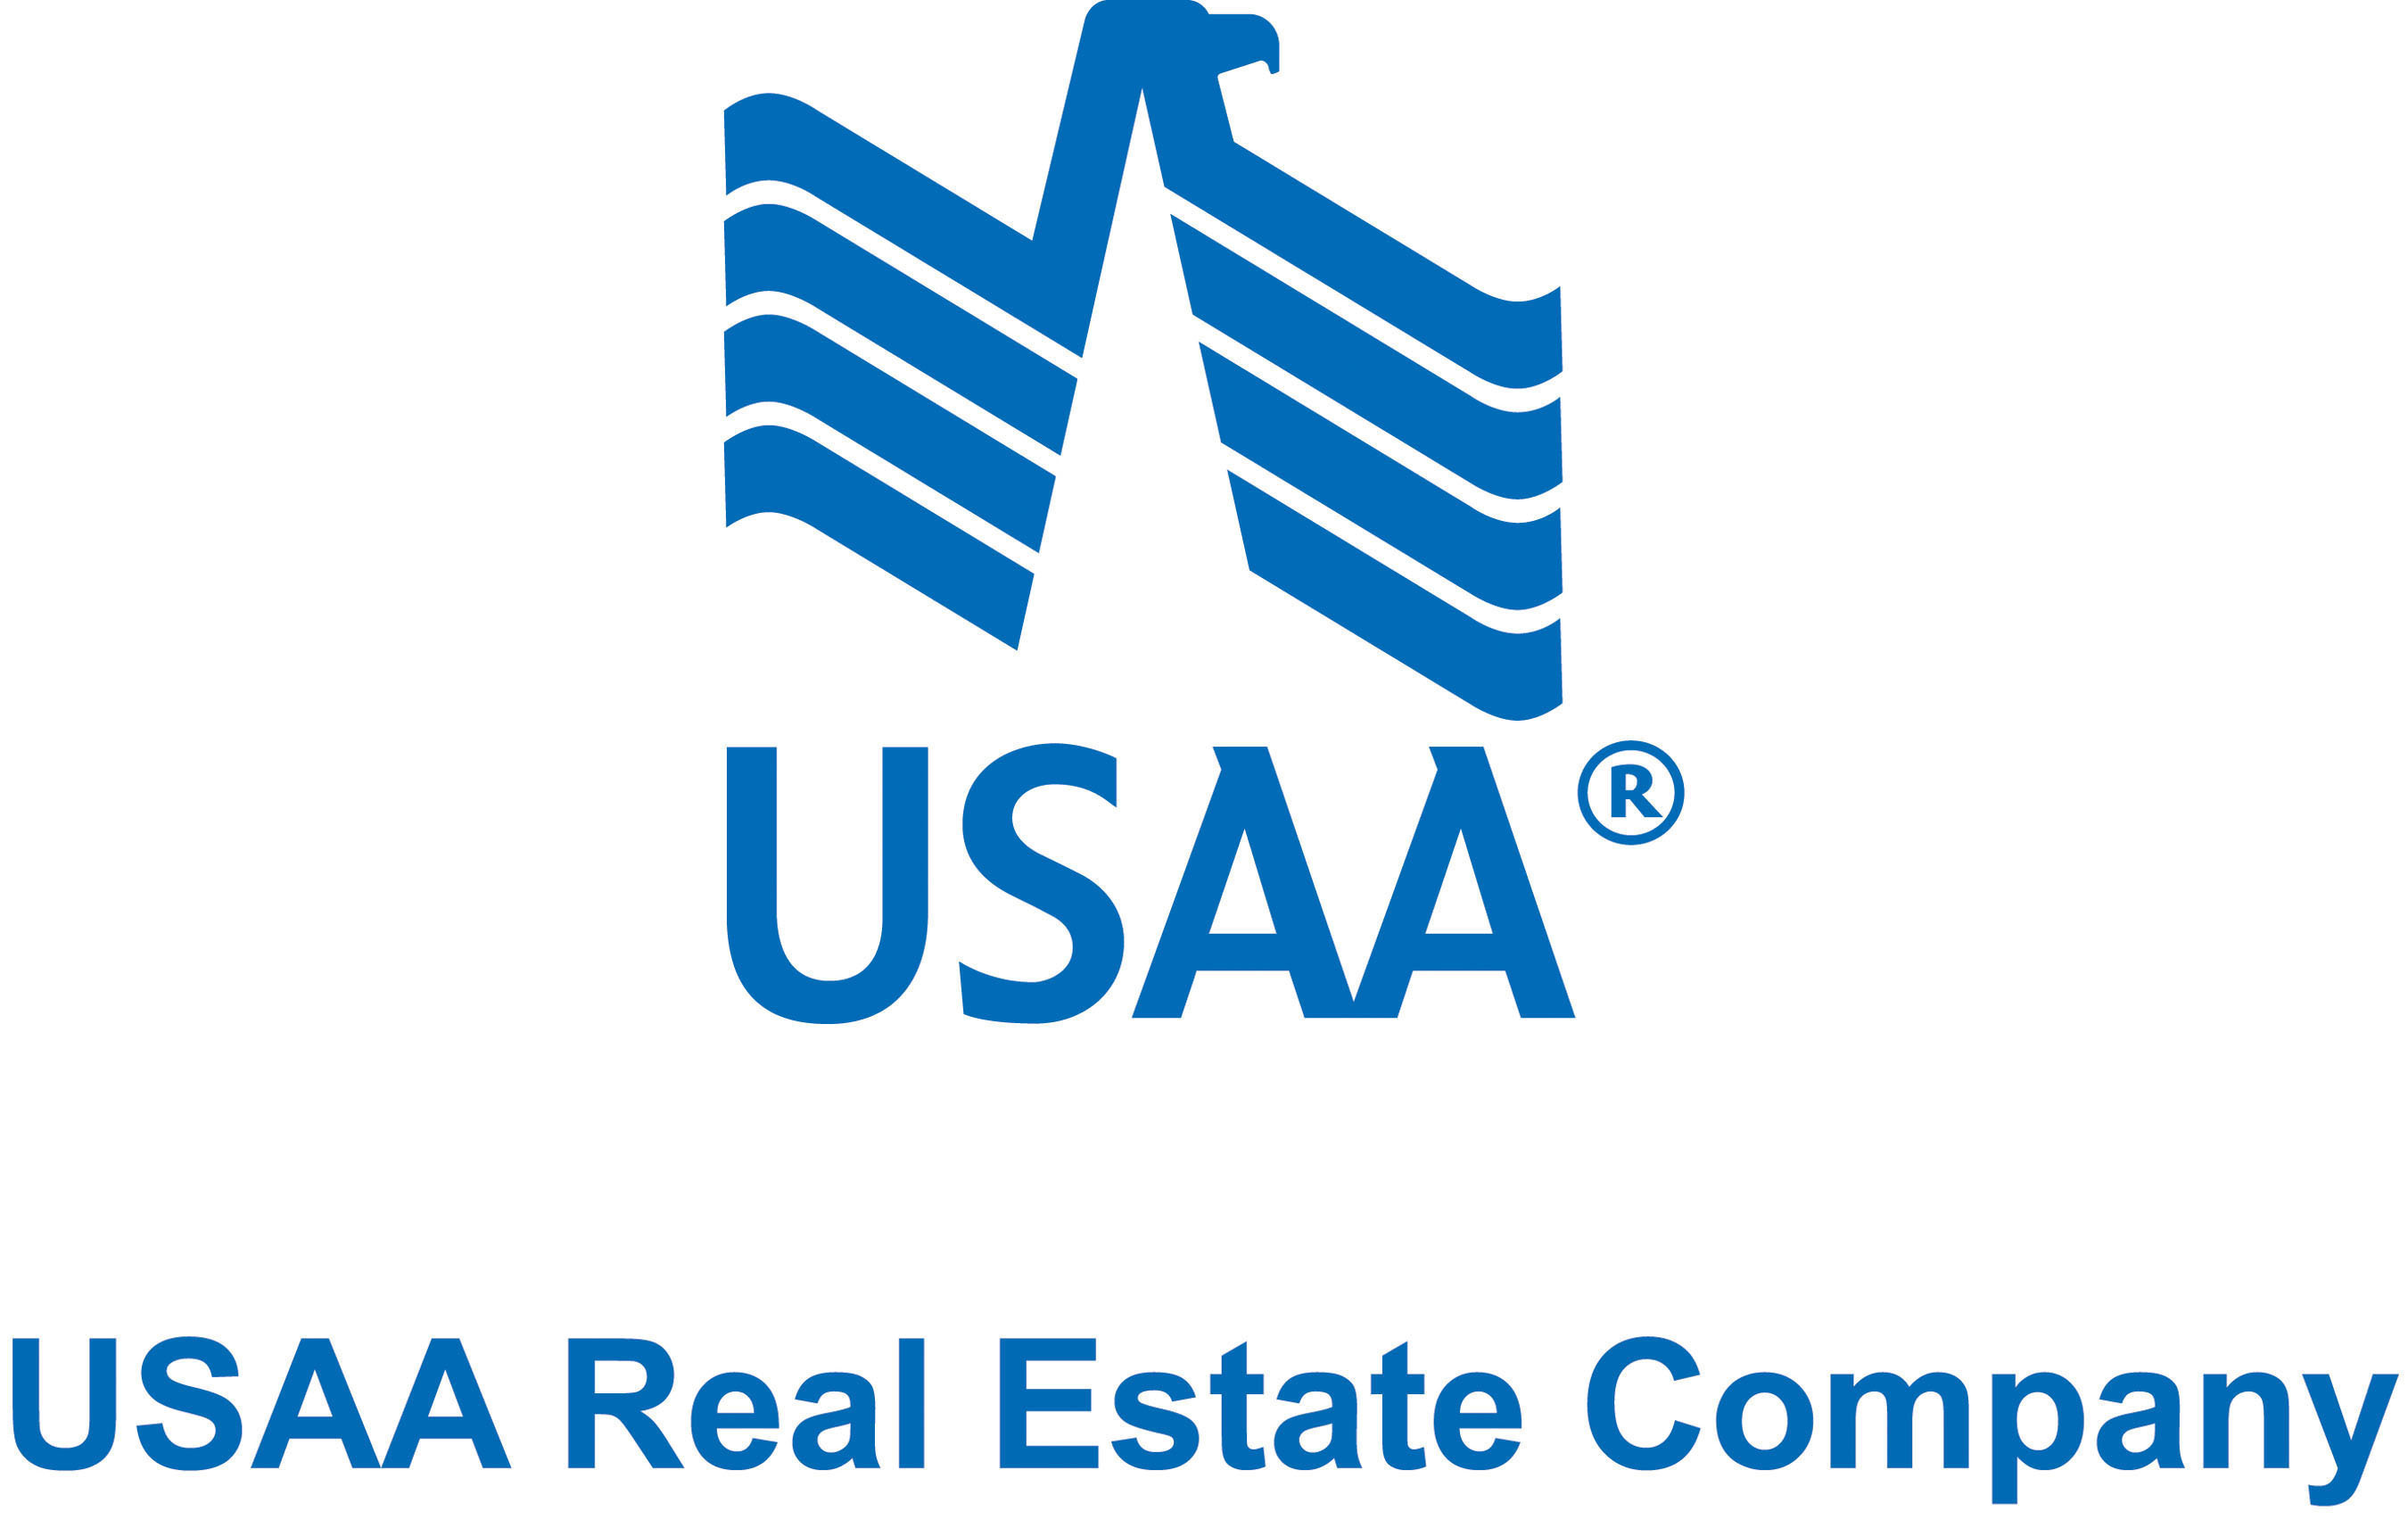 USAA Real Estate Company logo. (PRNewsFoto/USAA Real Estate Company) (PRNewsFoto/)